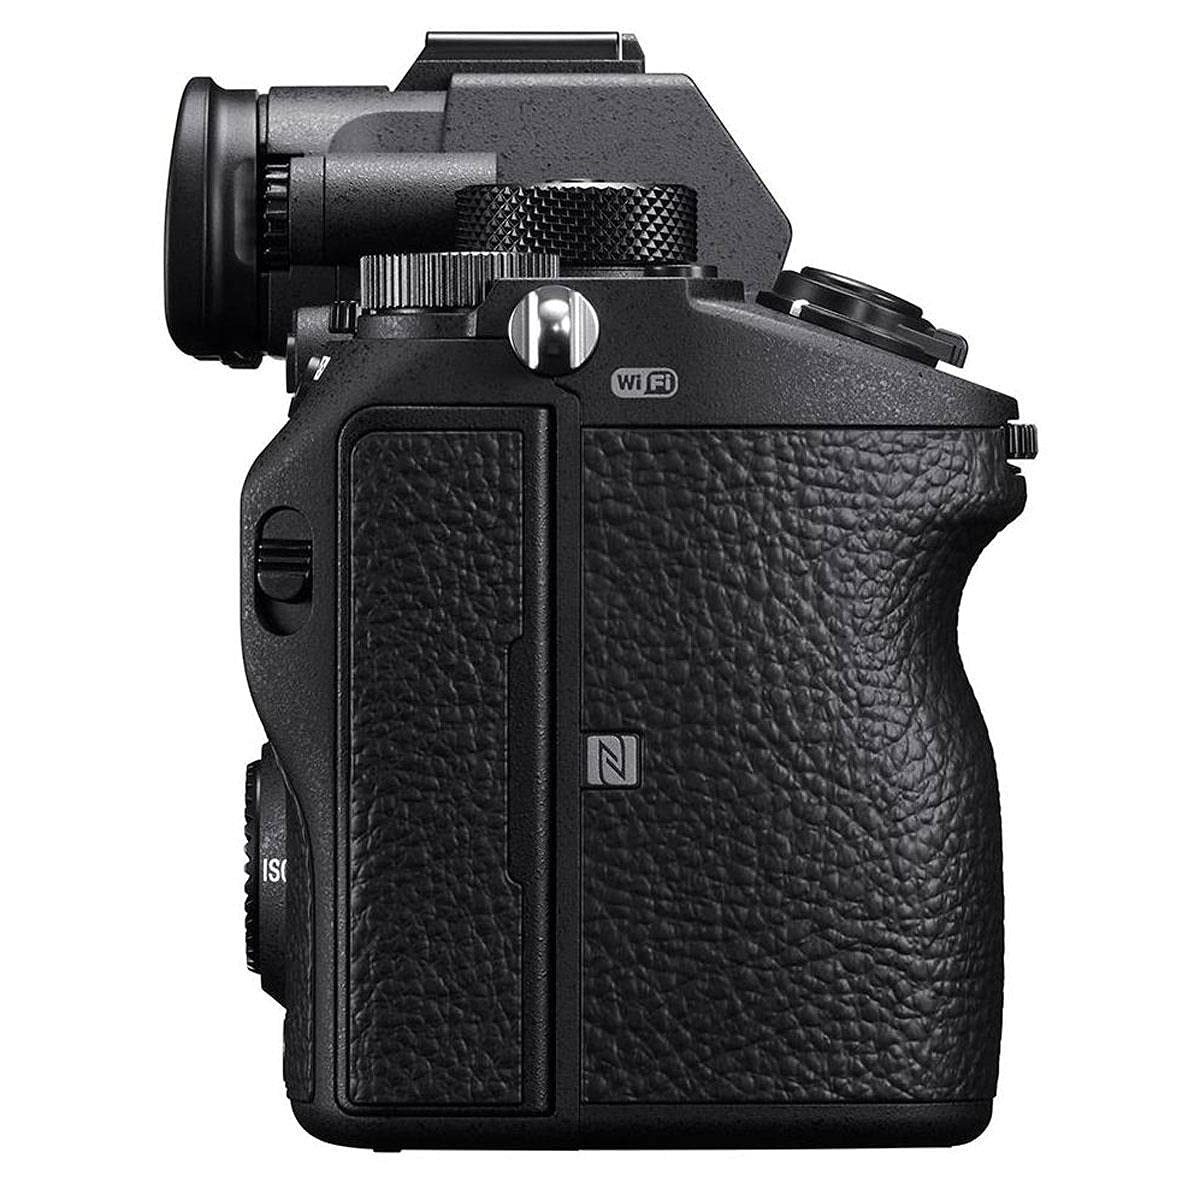 Sony Alpha a7R III Mirrorless Digital Camera (V2) with FE 24-105mm f/4 G OSS E-Mount Lens